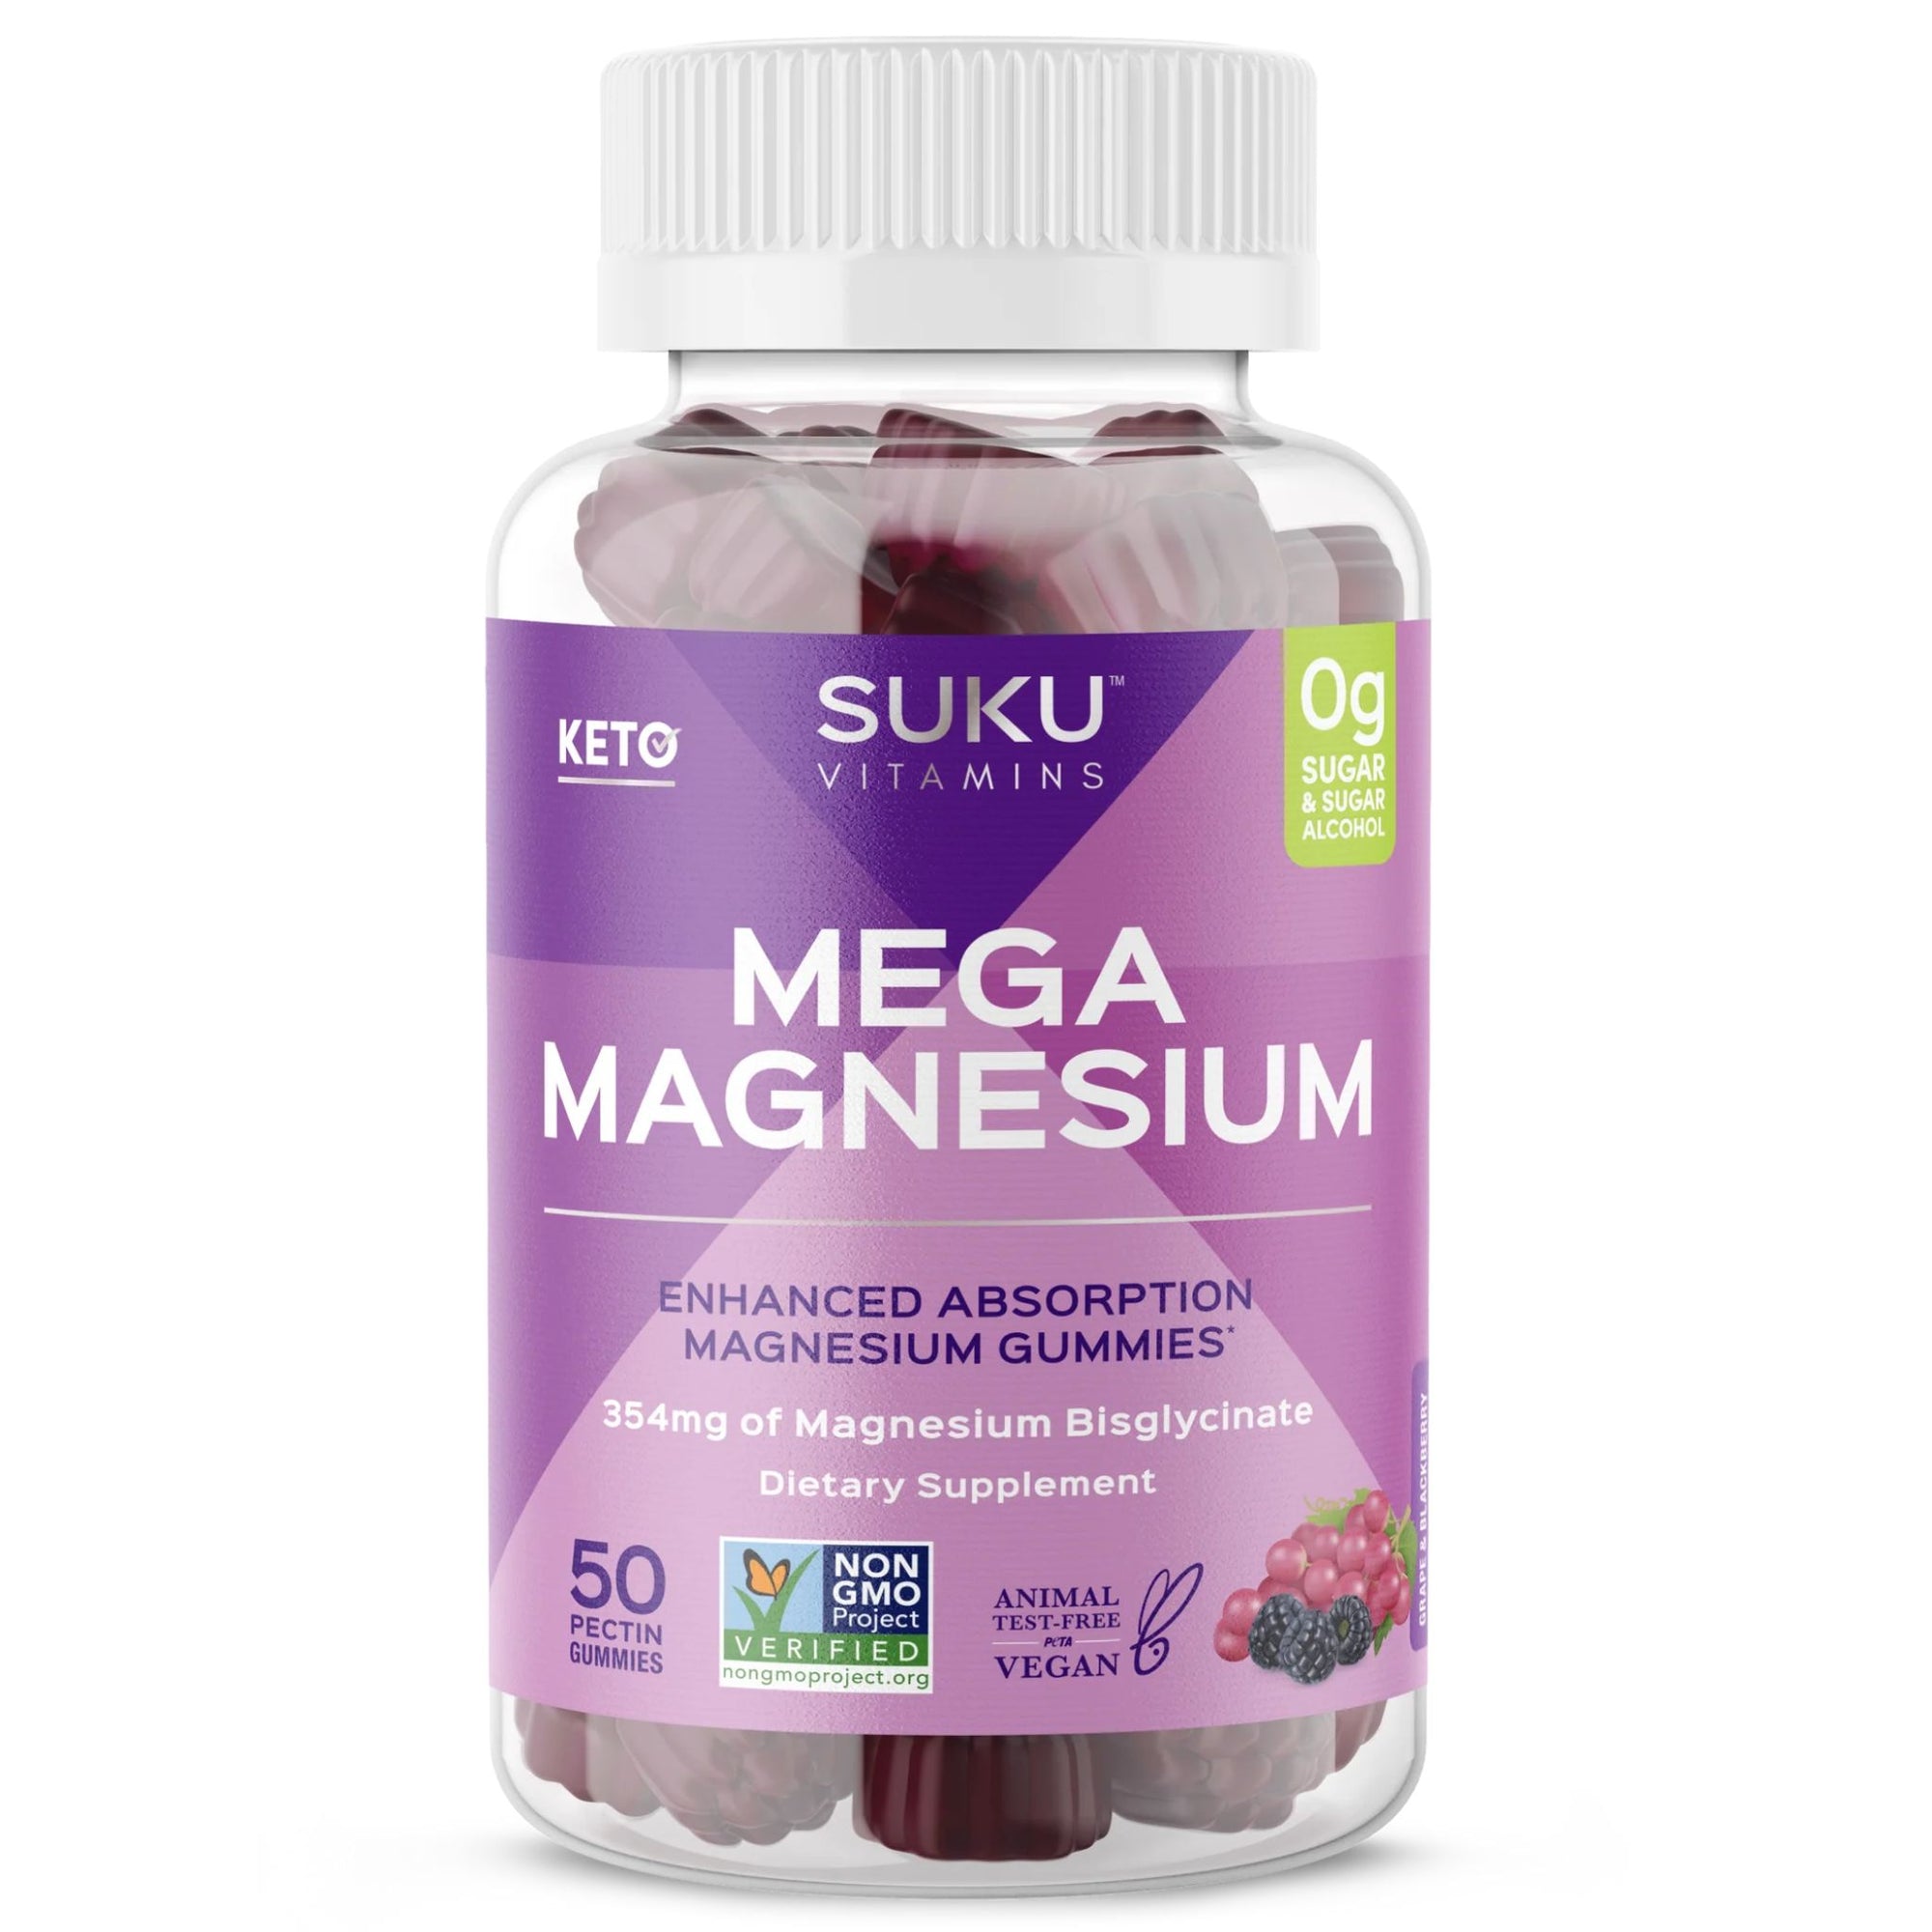 Suku Mega Magnesium 60 gummies (new packaging, same product). Enhanced absorption - 354mg Magnesium Bisglycinate. 